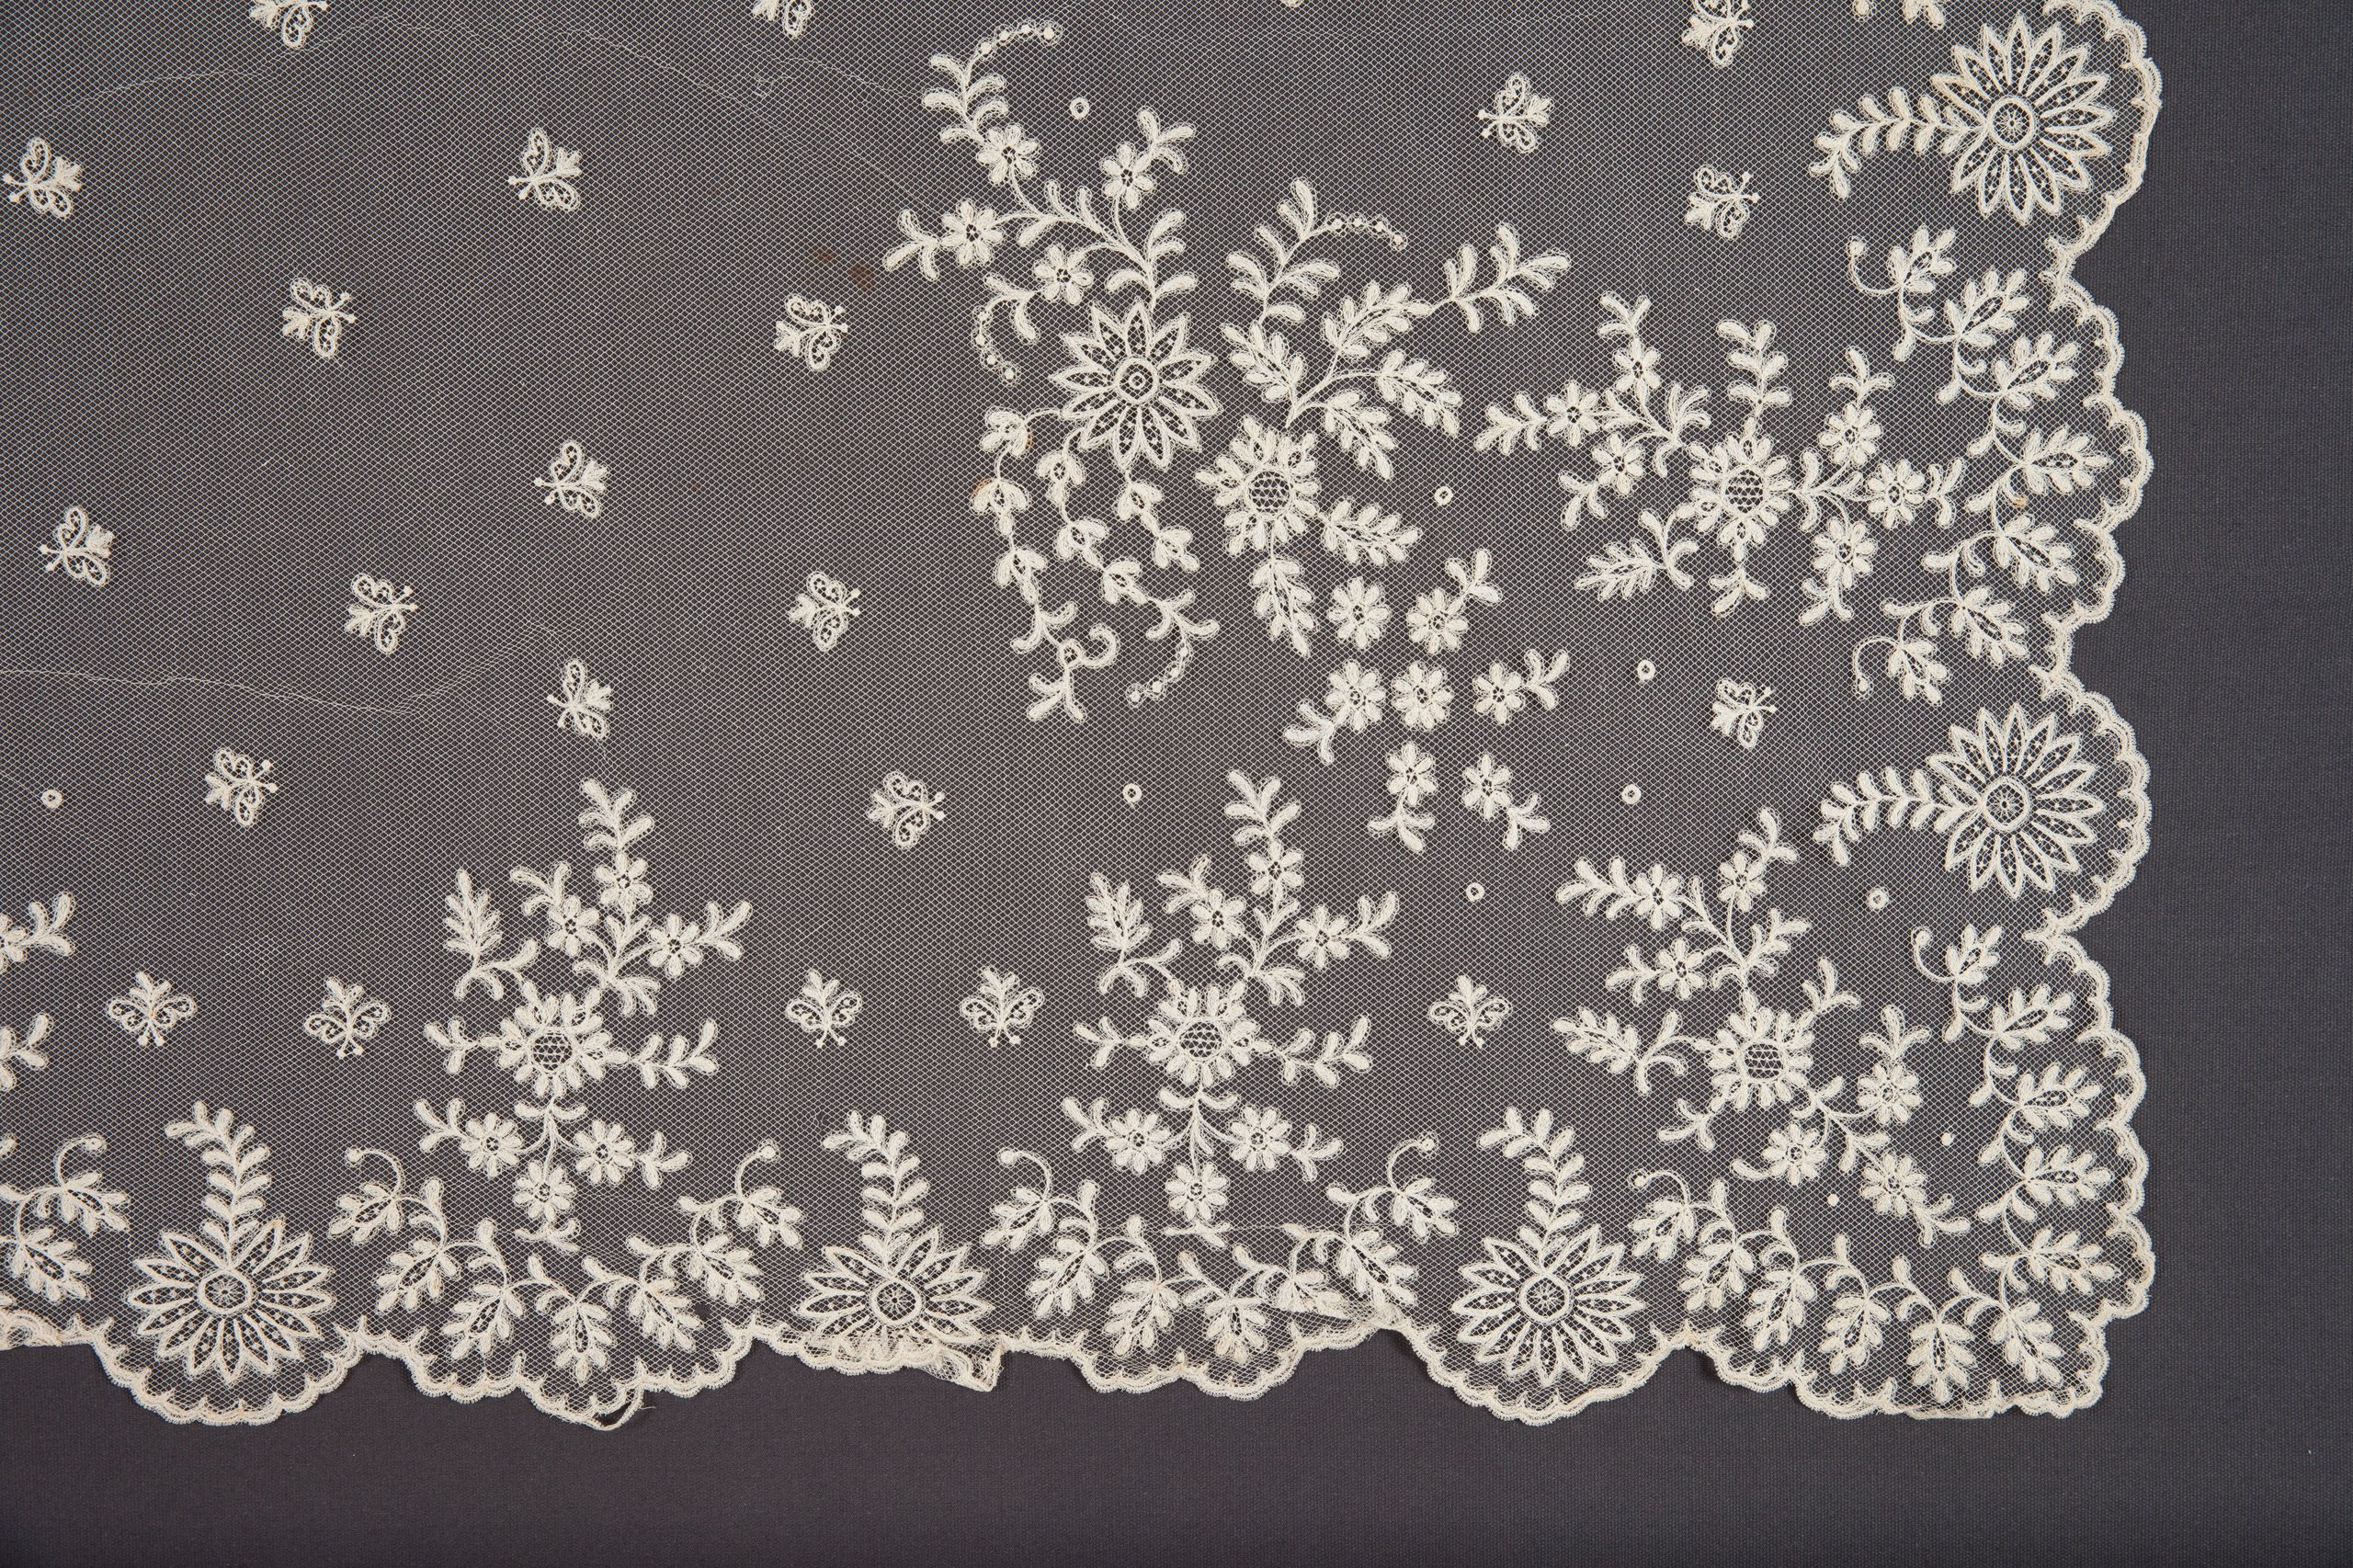 Embroidered cotton wedding veil